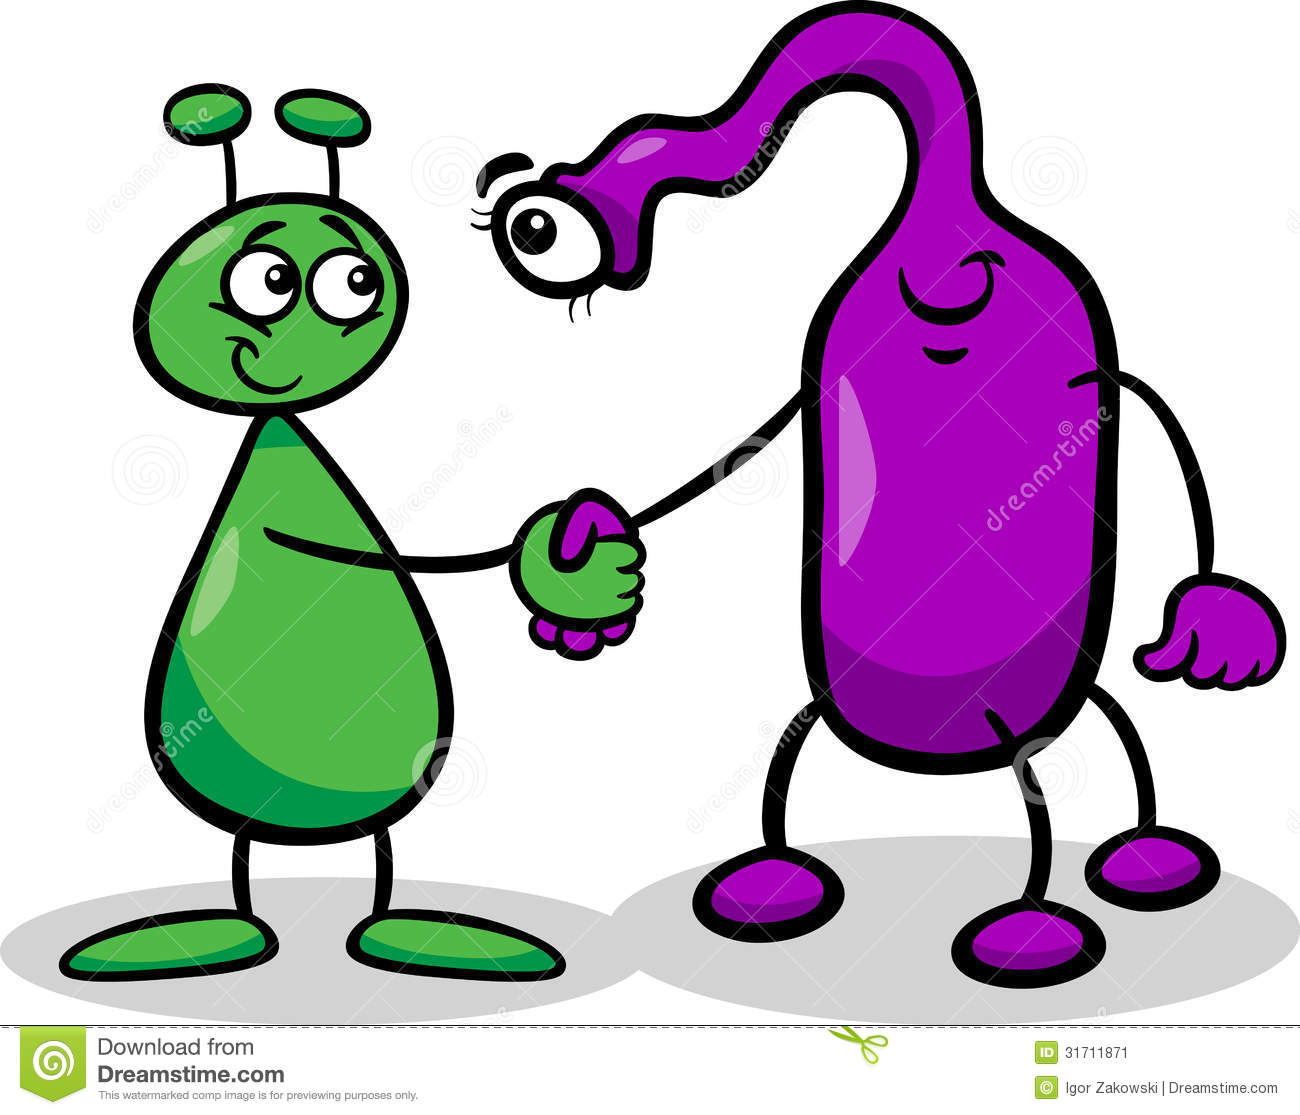 Aliens Or Martians Cartoon Illustration Stock Image   Image  31711871